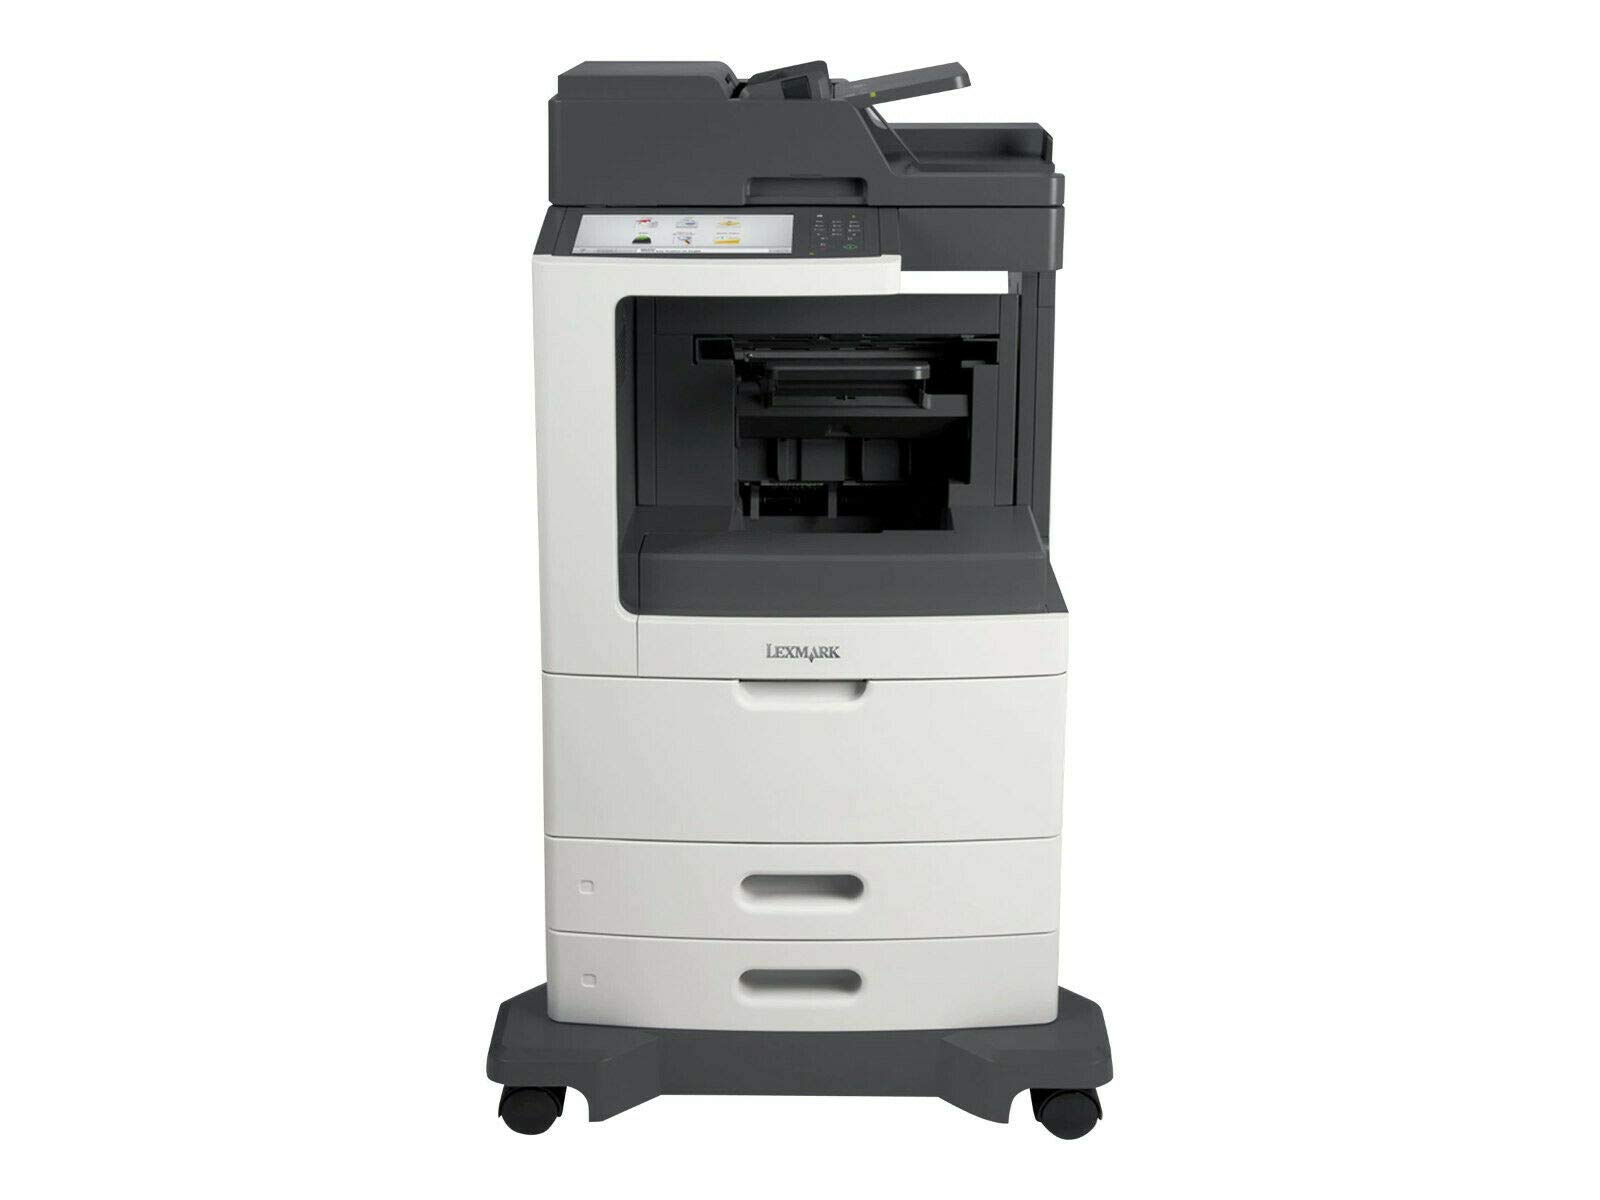 12L0102 - Optra W810 B/W Laser Printer